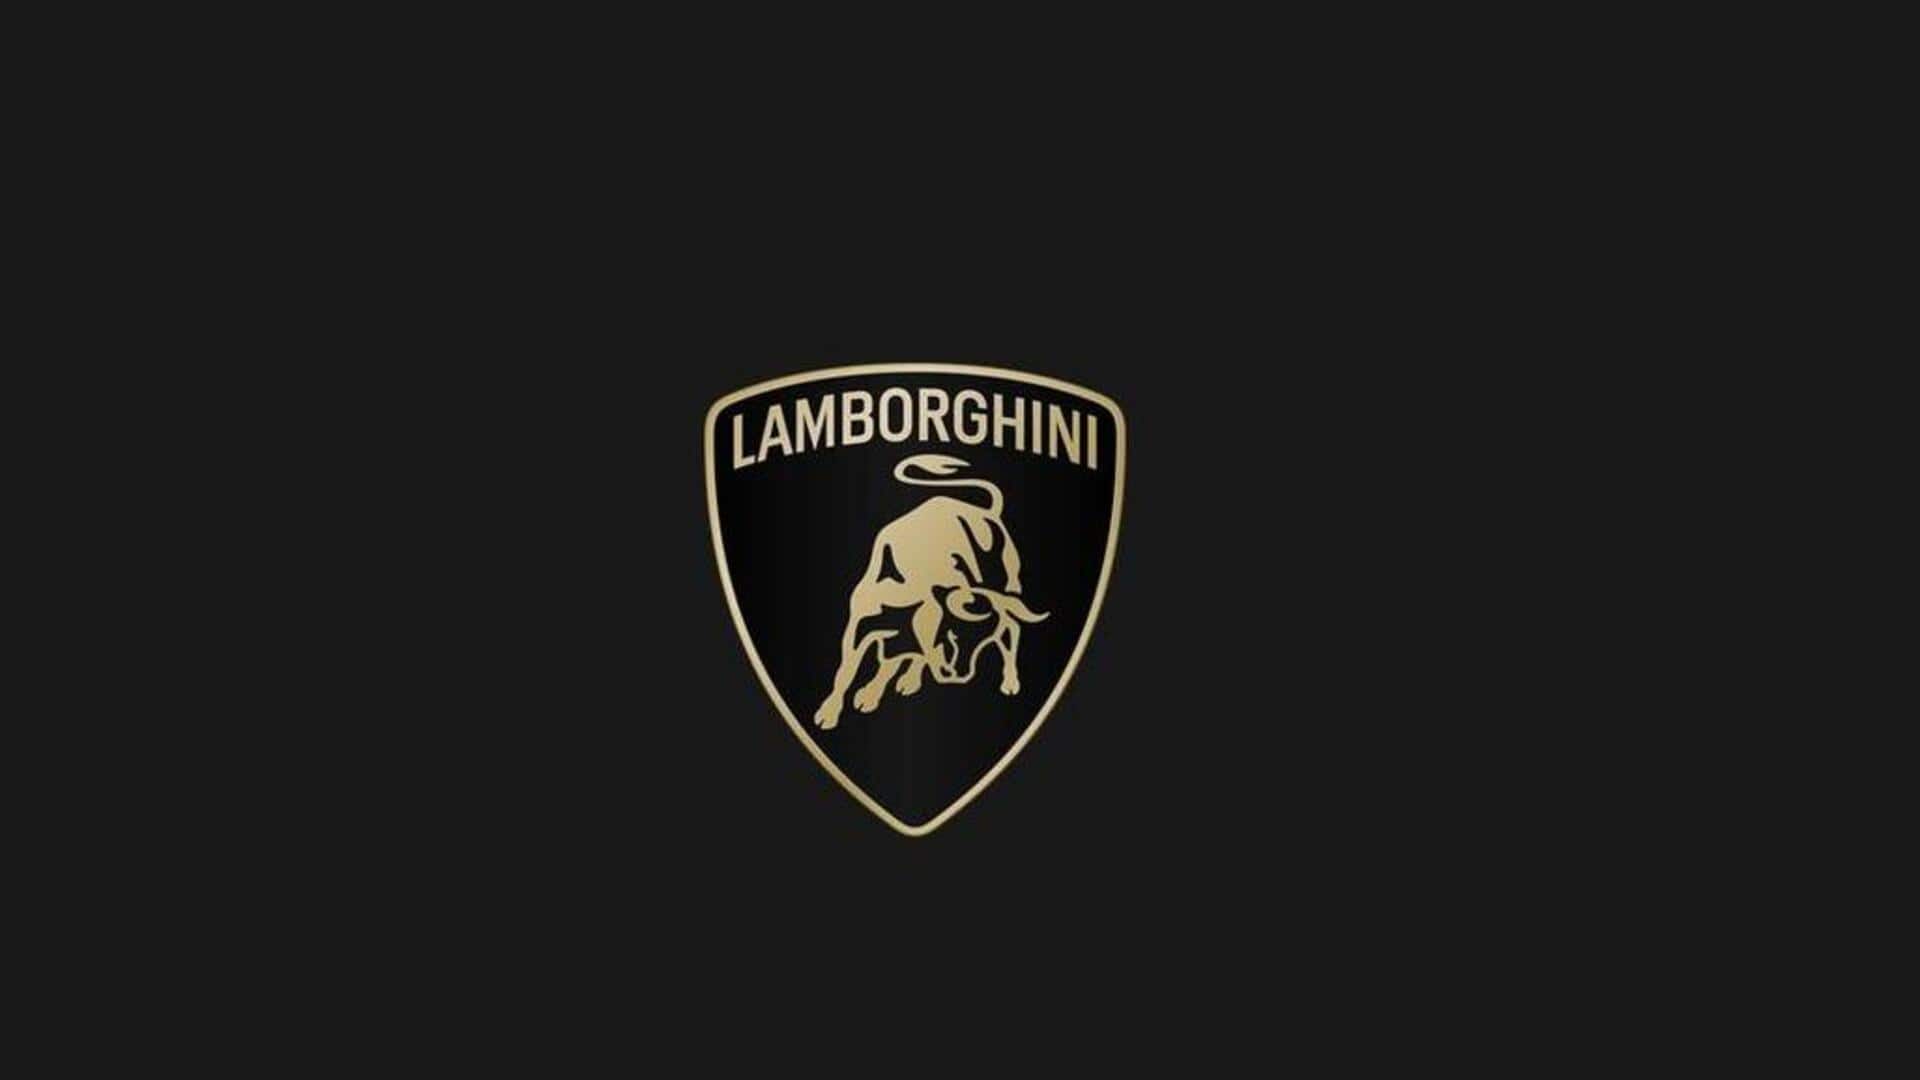 Lamborghini's new logo looks a lot like the 20-years-old one